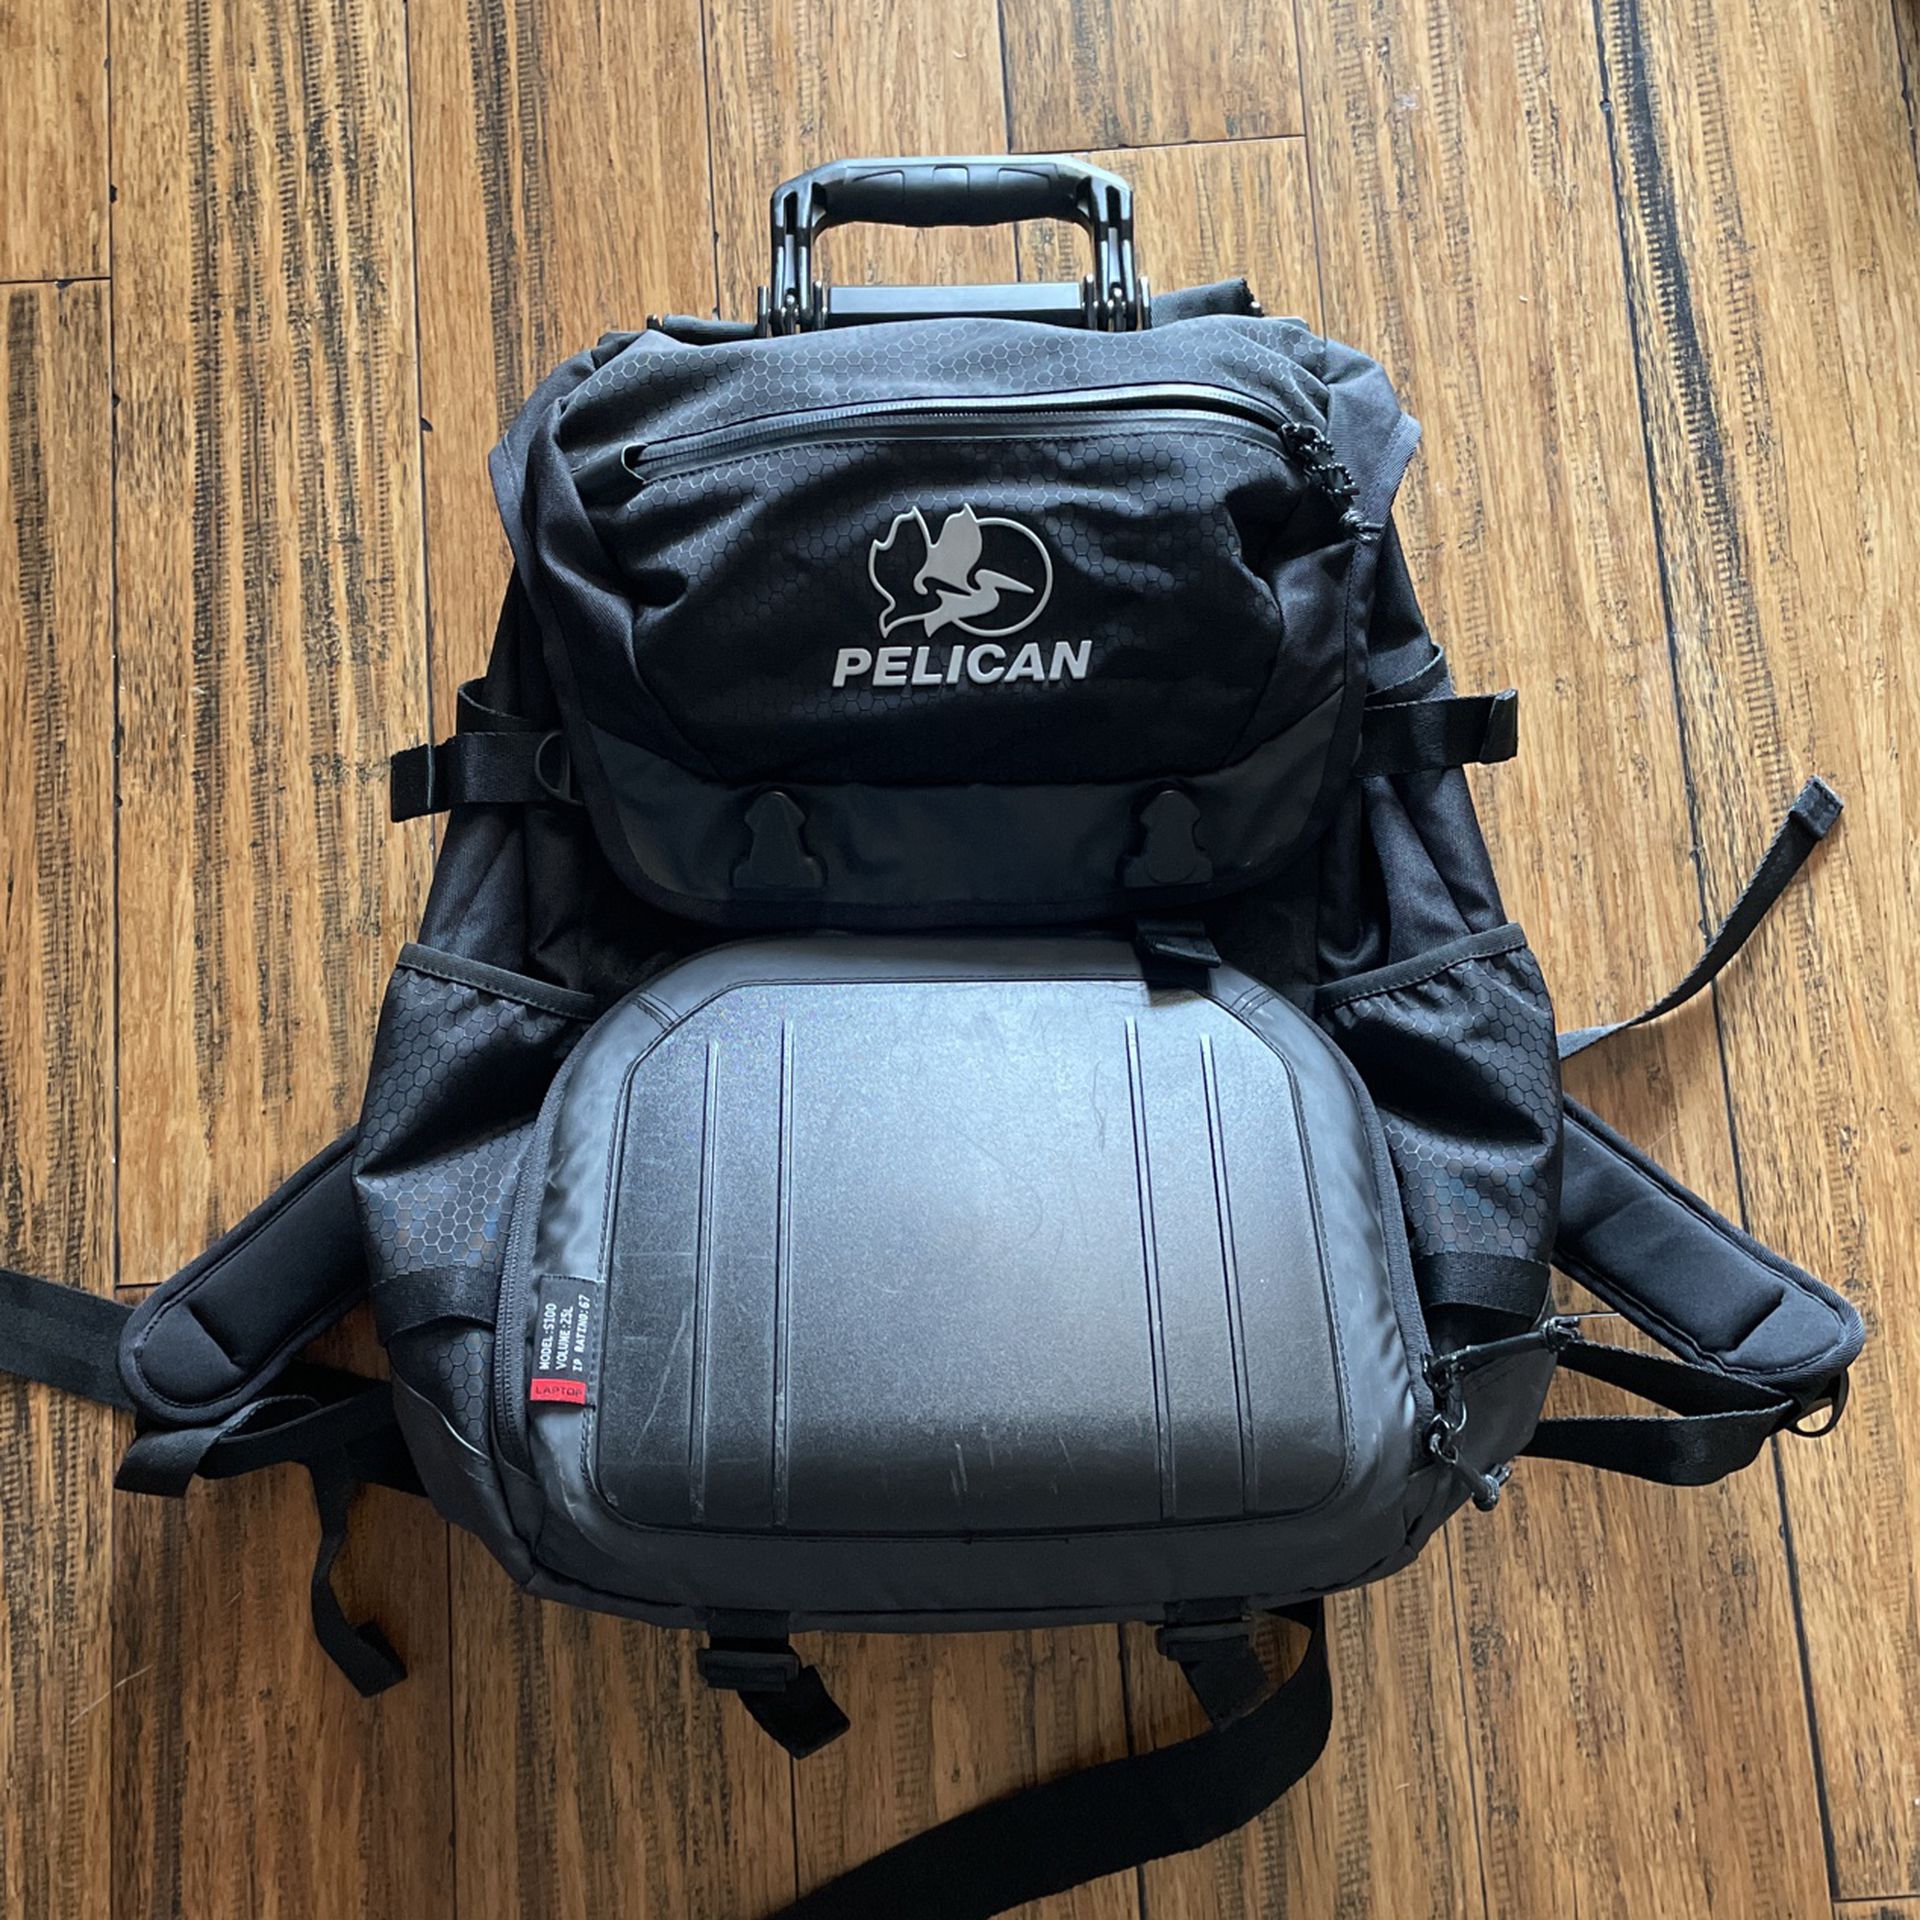 Pelican S100 Laptop Protector Backpack